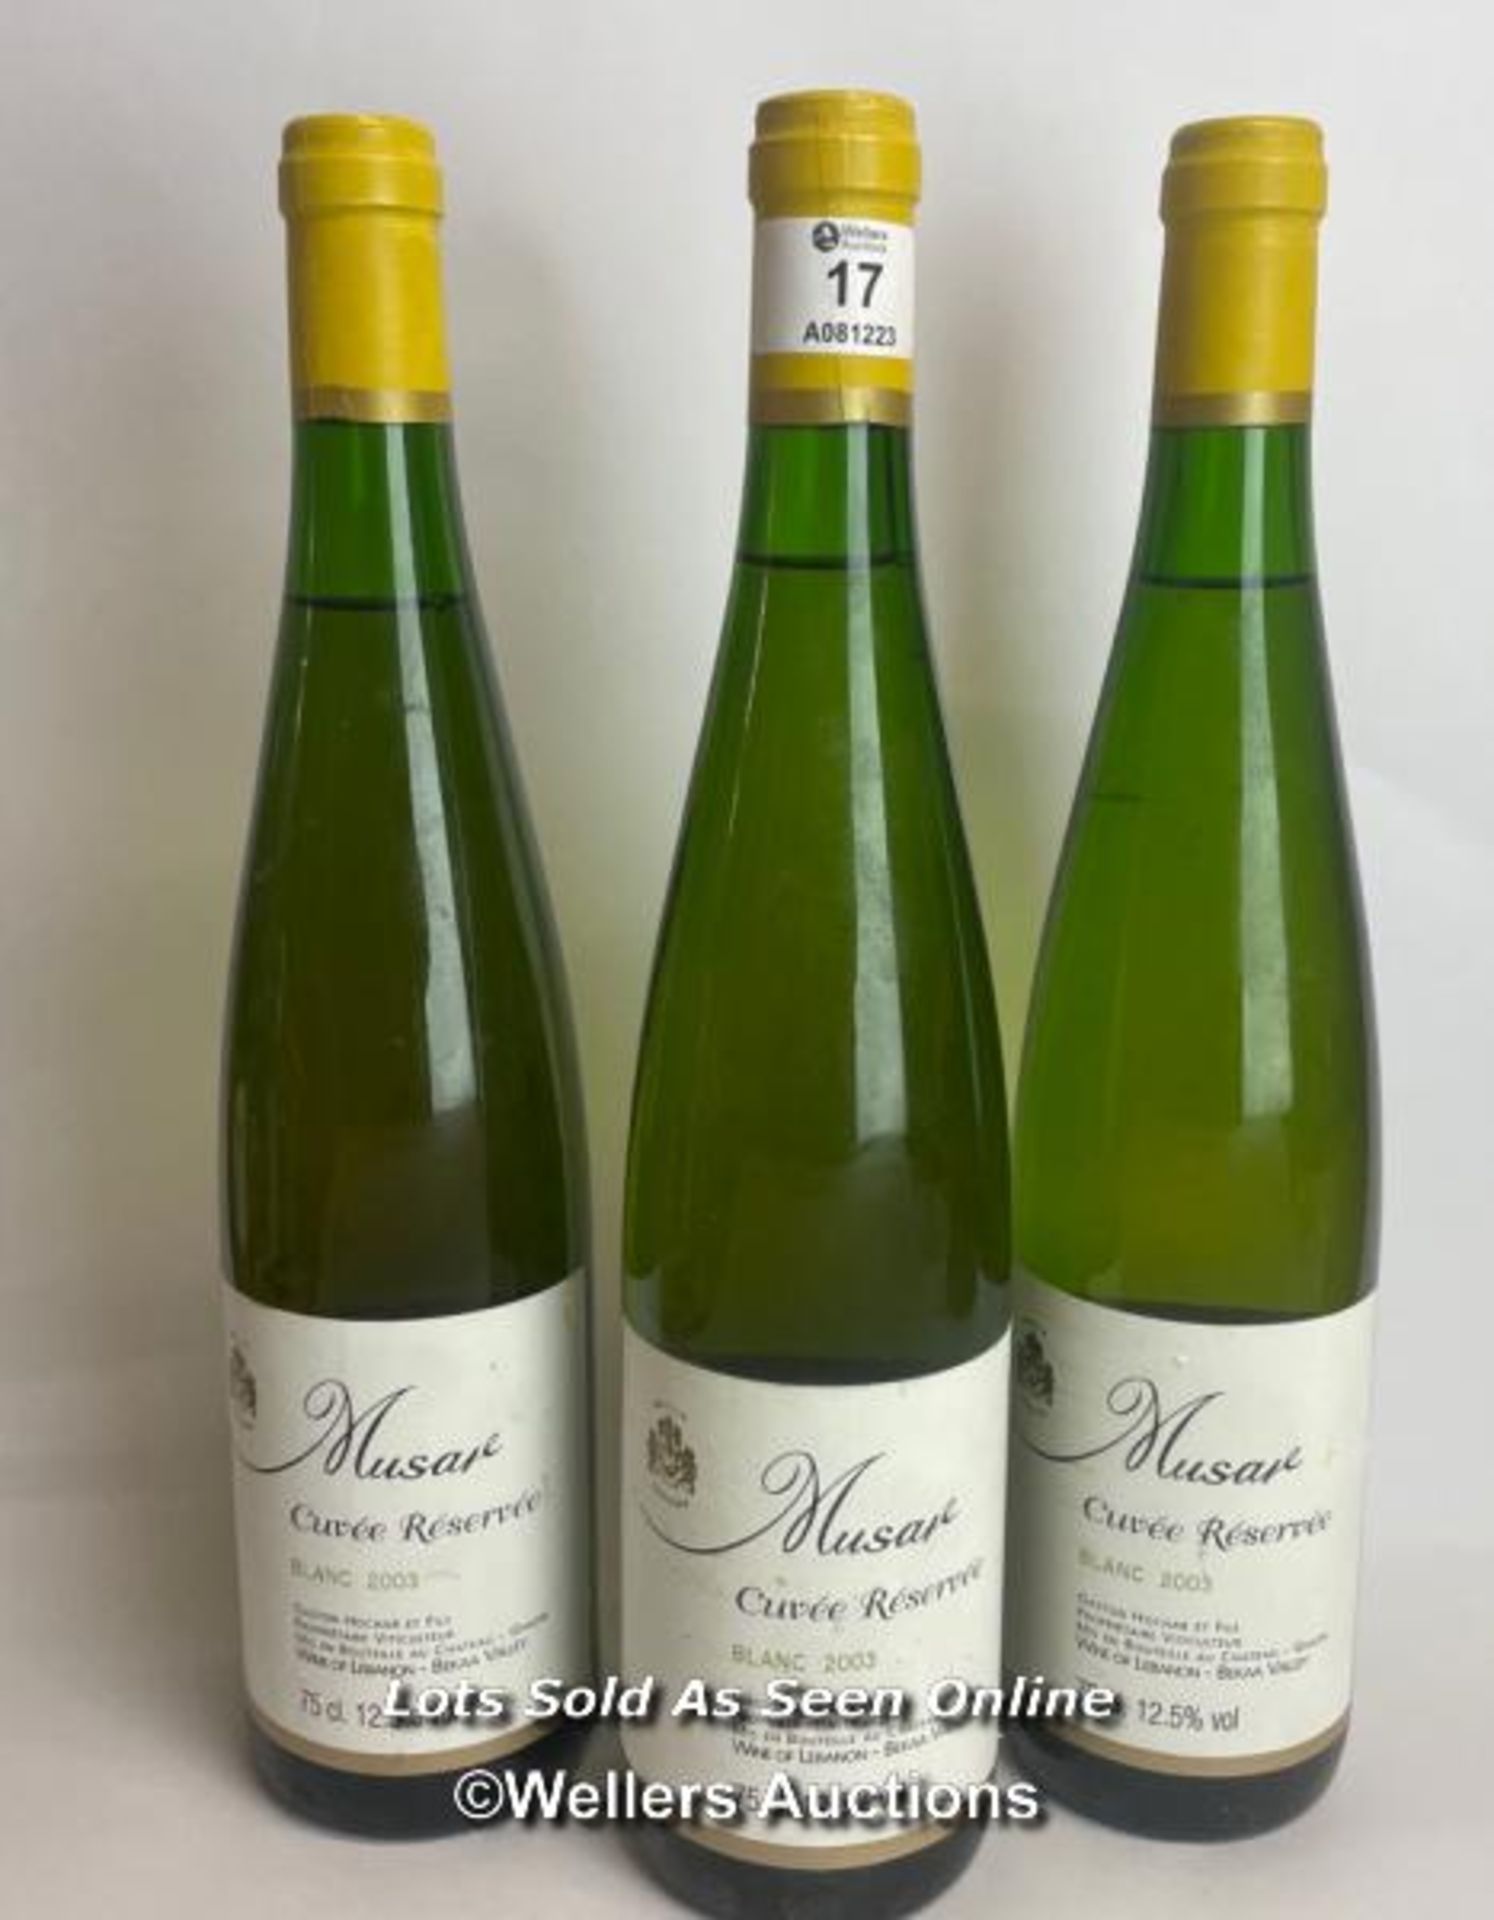 Three bottles of 2003 Musar Cuvee Reserve Blanc, Wine of Lebanon (Bekaa Valley), 75cl, 12.5% vol /